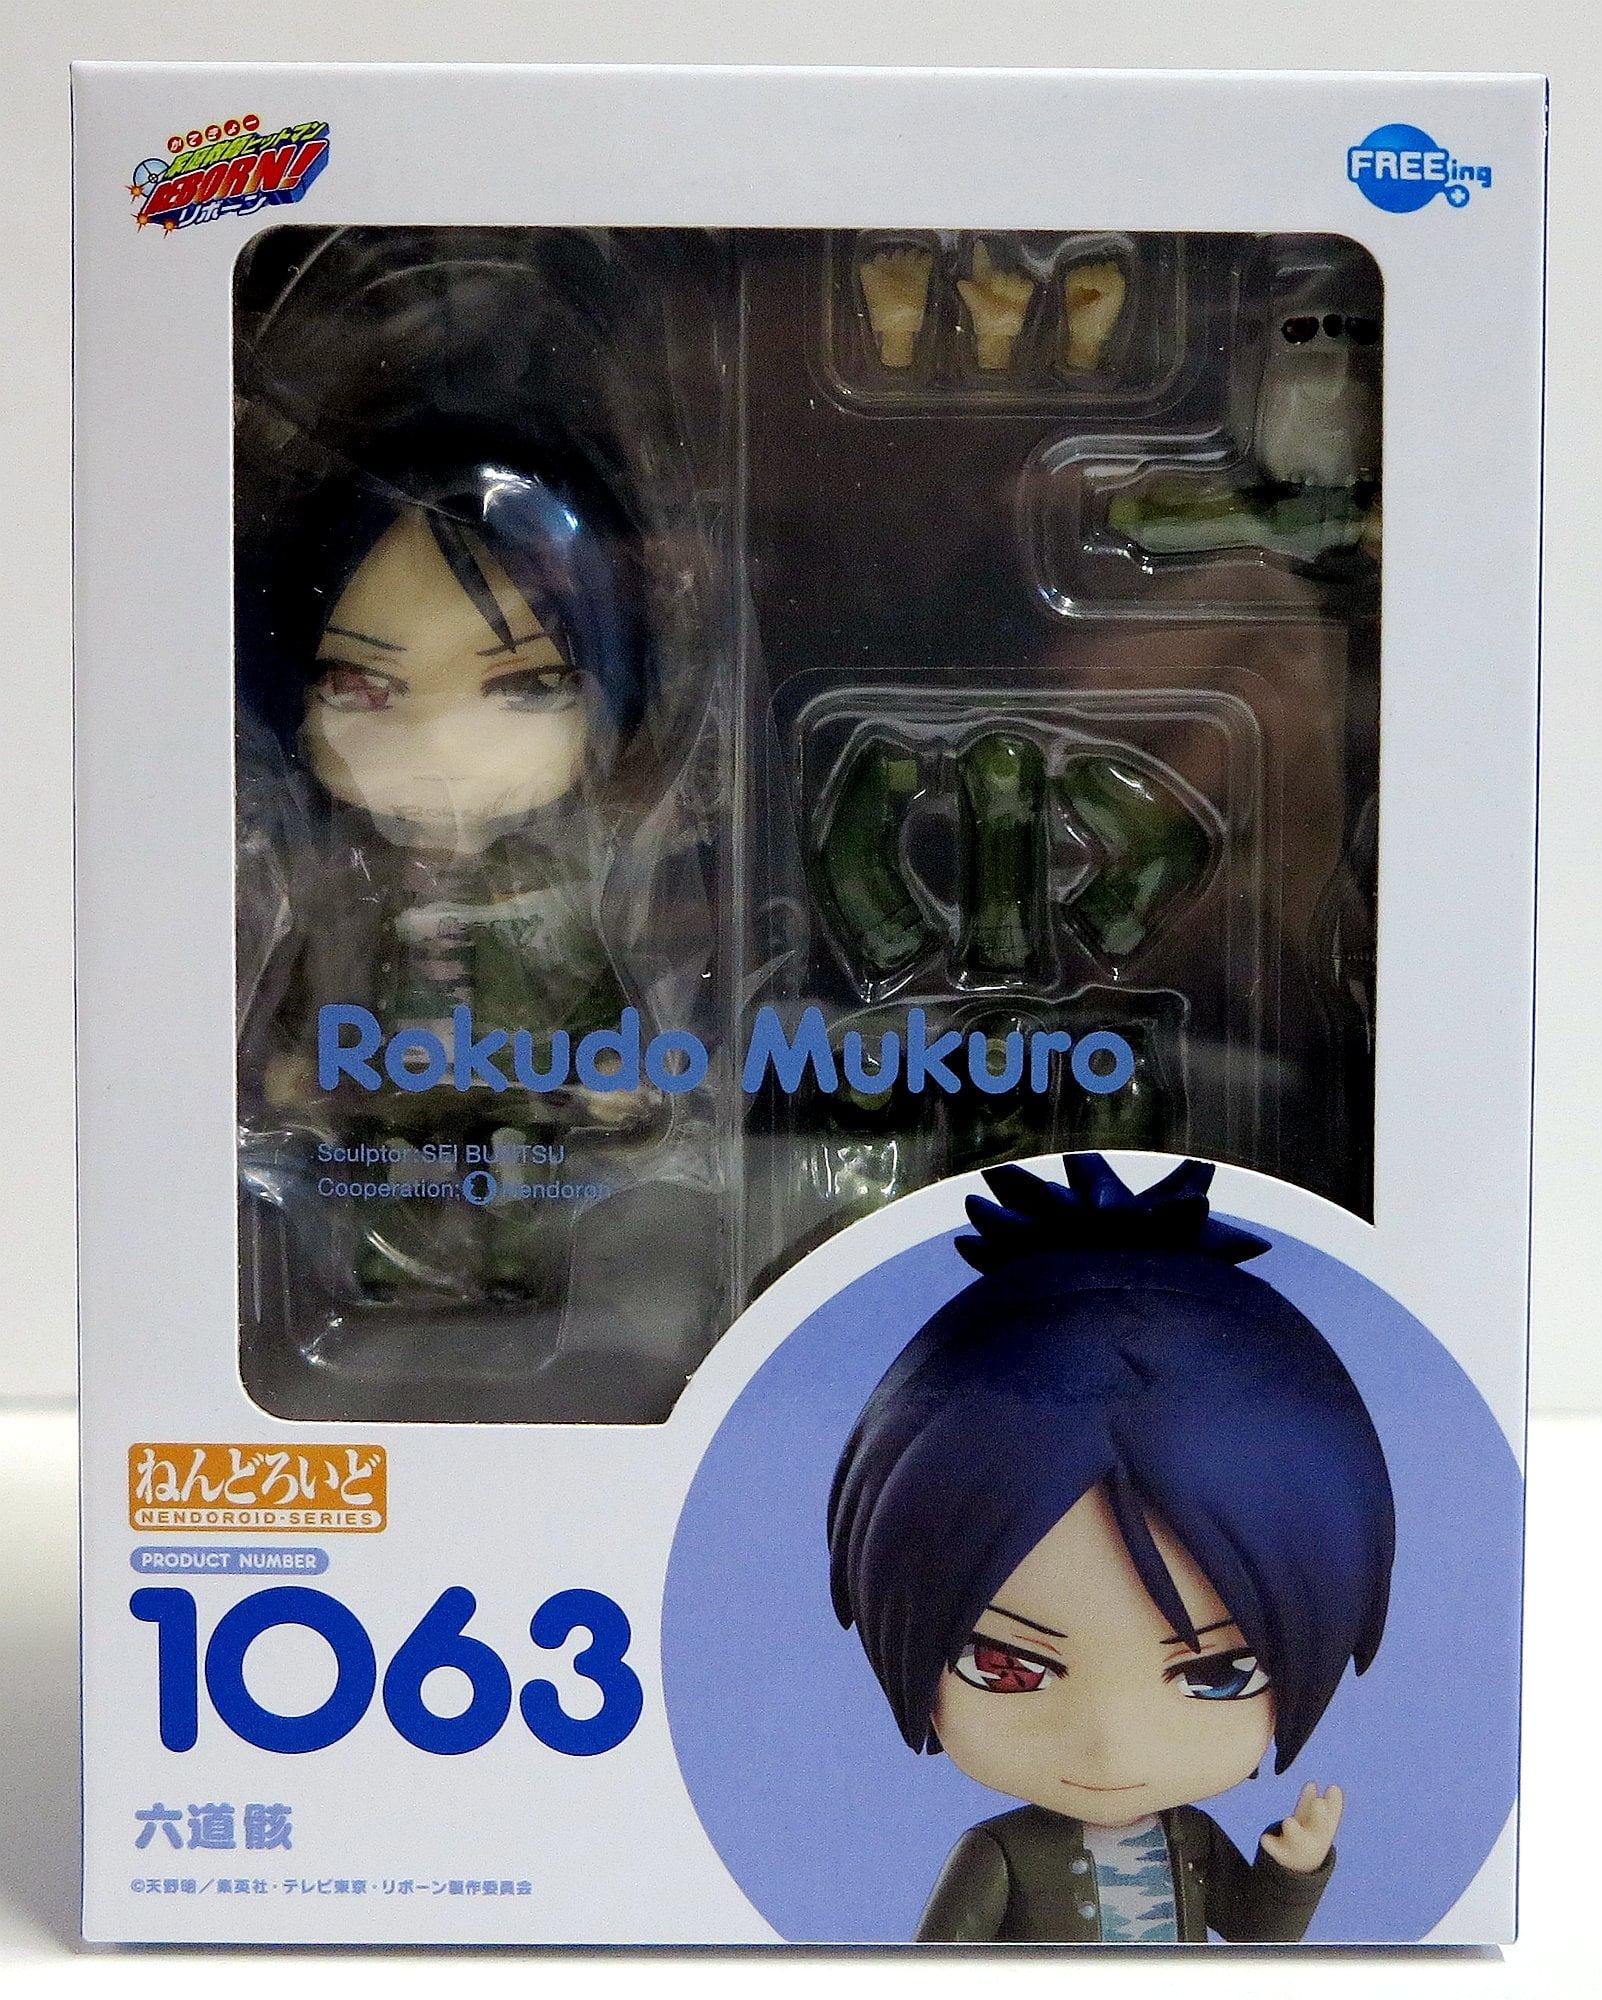 Nendoroid Reborn Mukuro Rokudo 1063 Action Figure Walmart Com Walmart Com